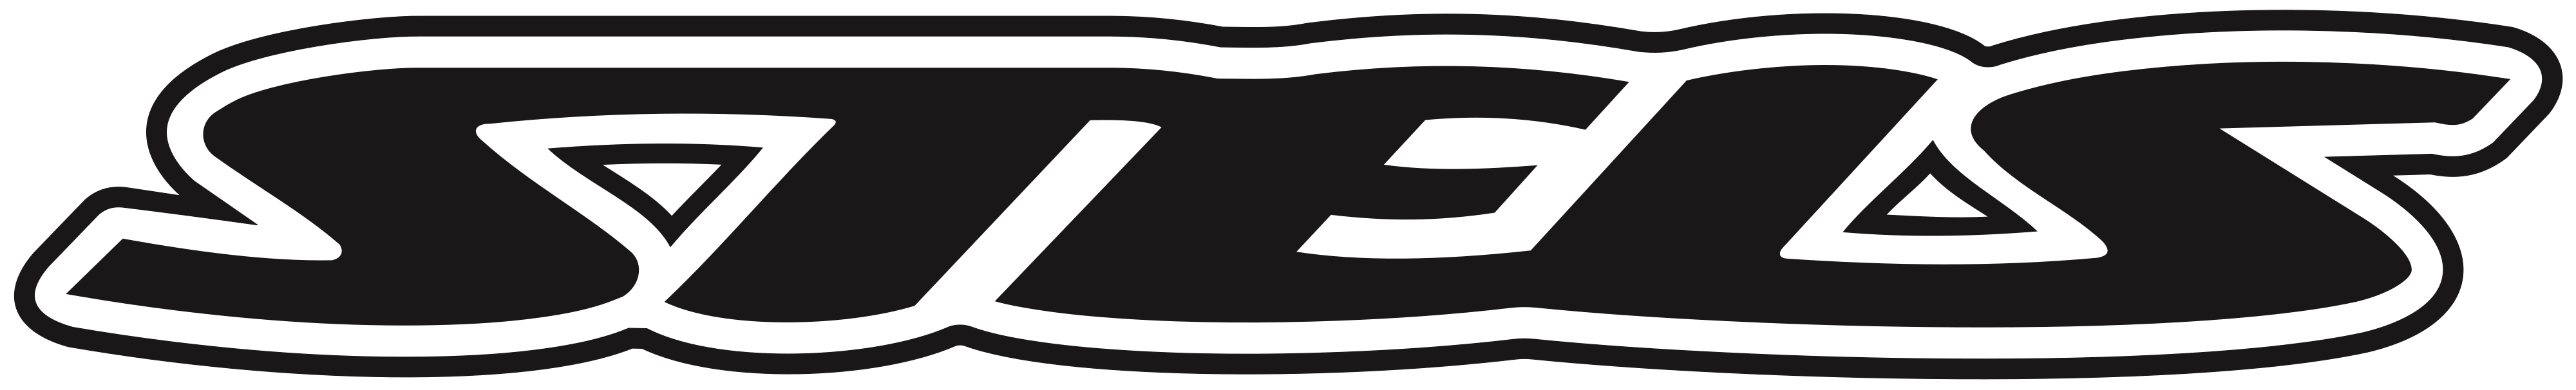 Stels logo. Stels велосипеды logo. Stels логотип в векторе. Наклейки stels gt500. Наклейки стелс